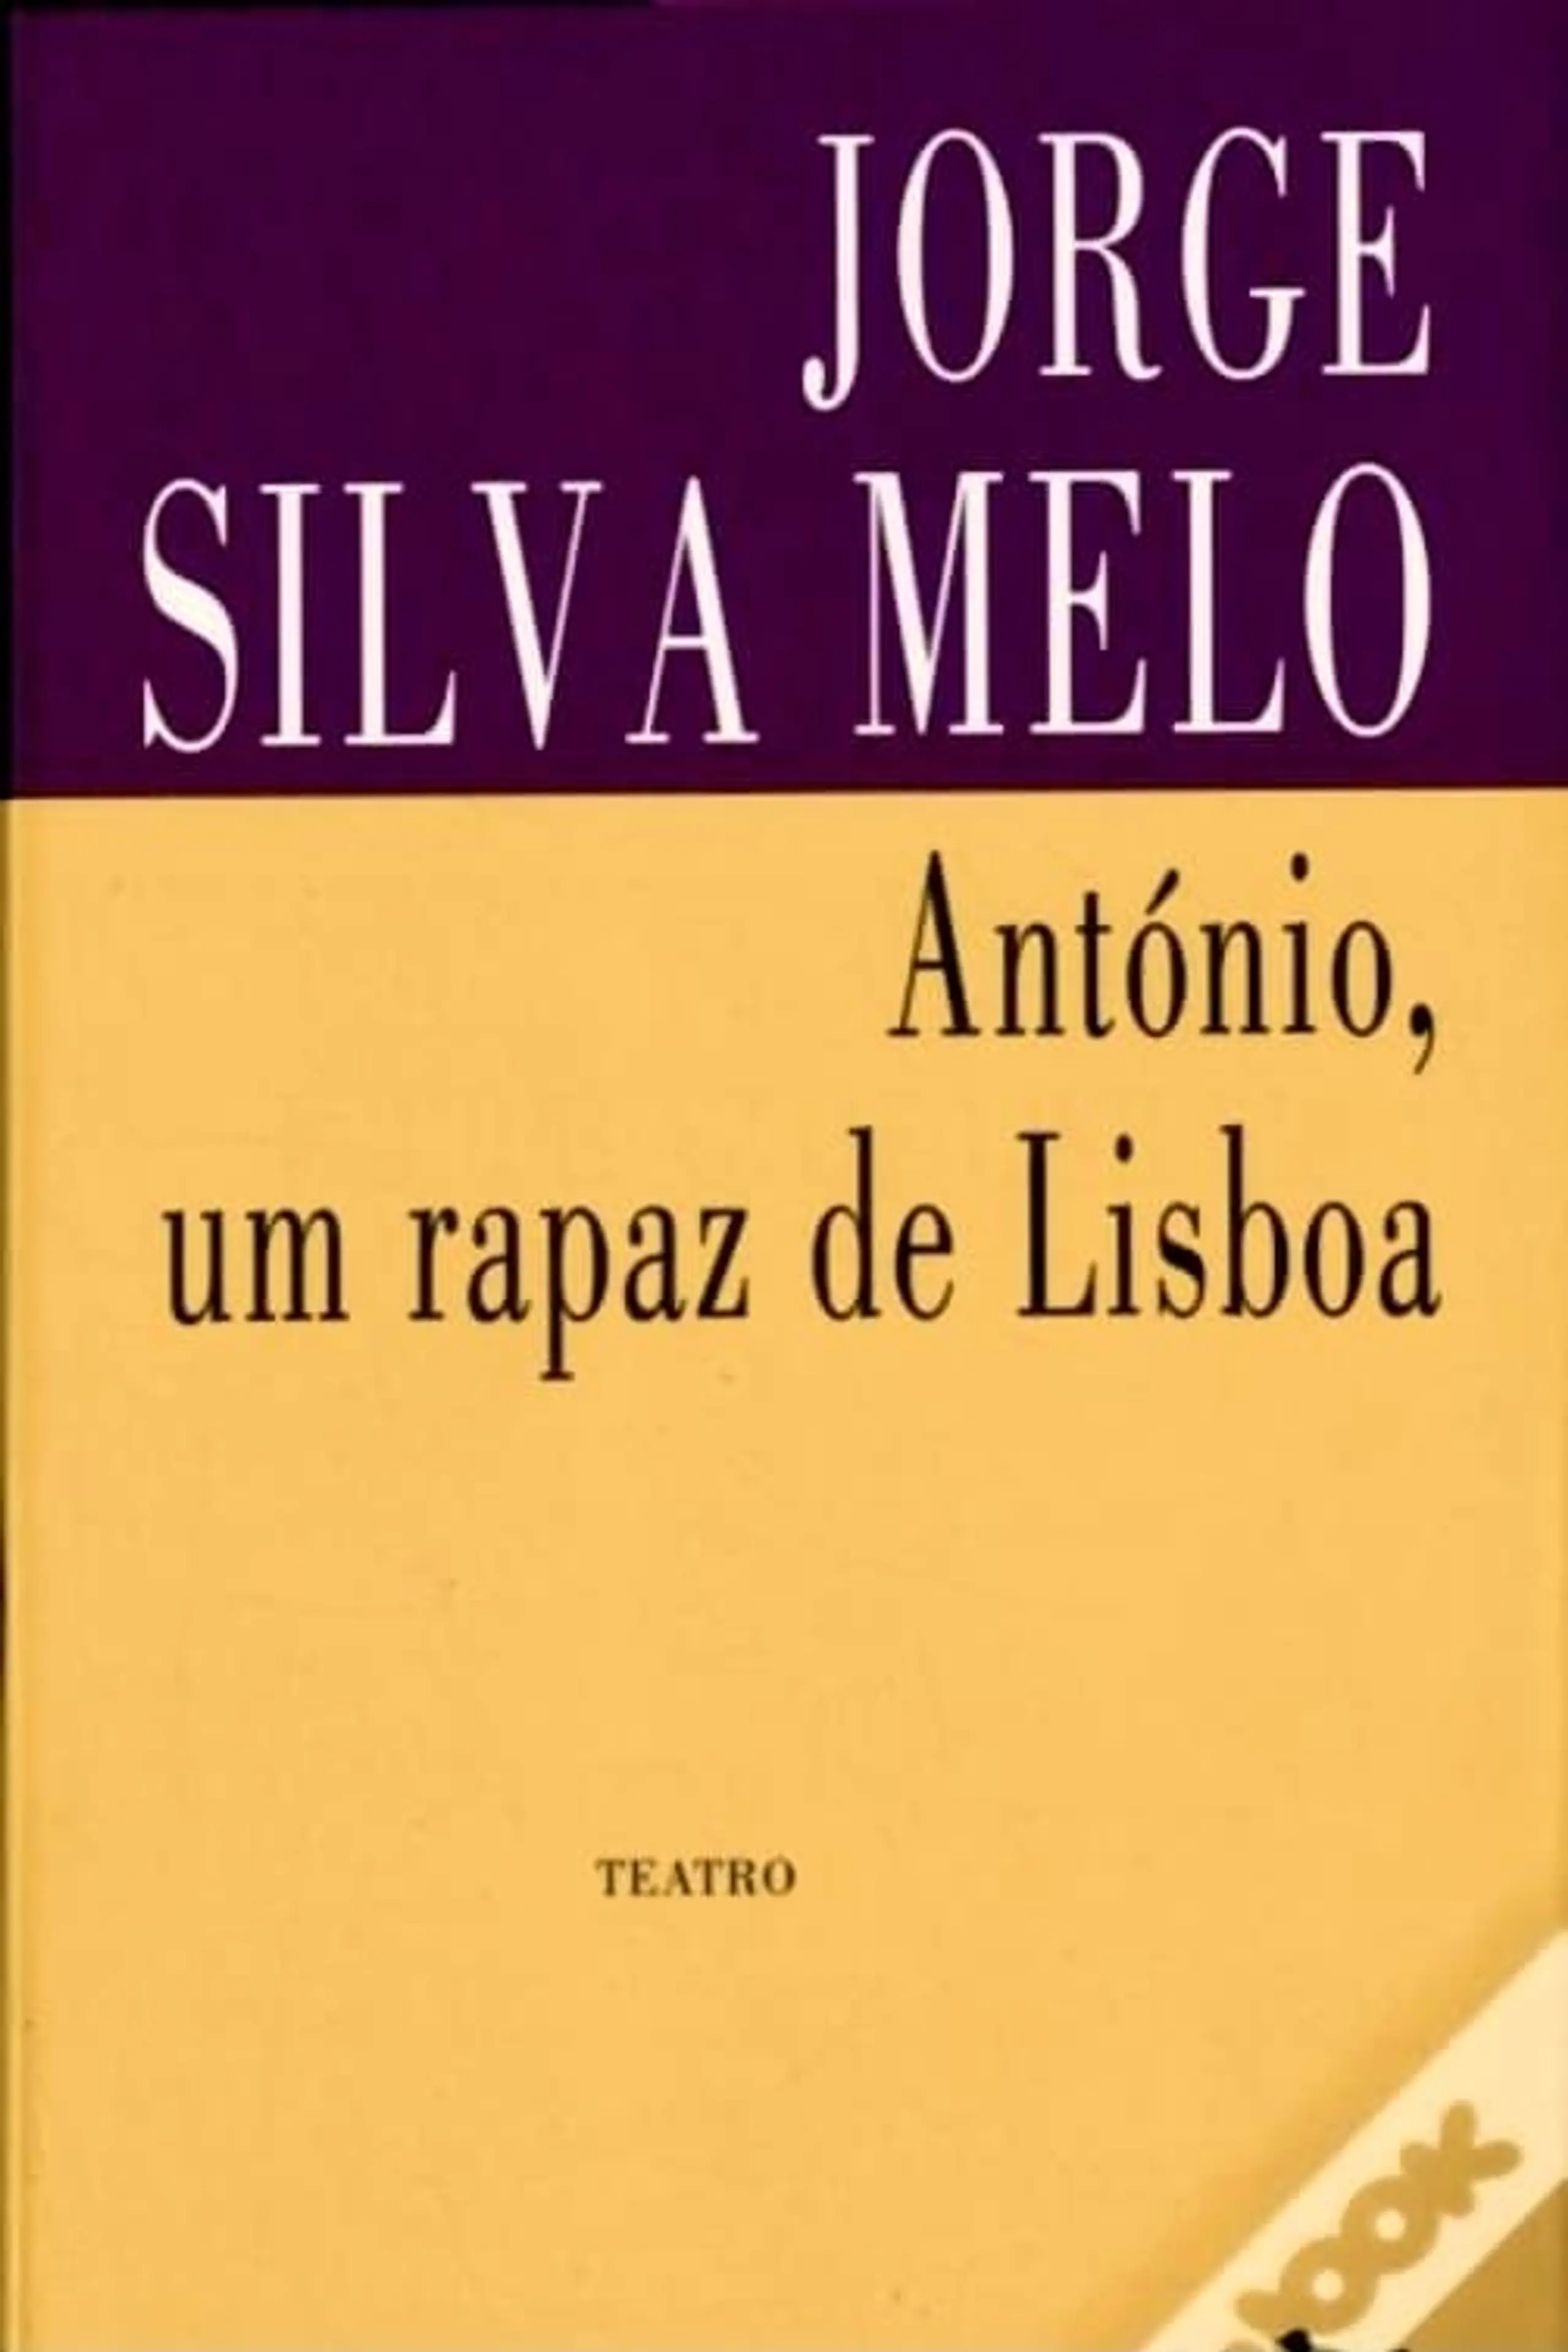 Antonio, a boy in Lisbon